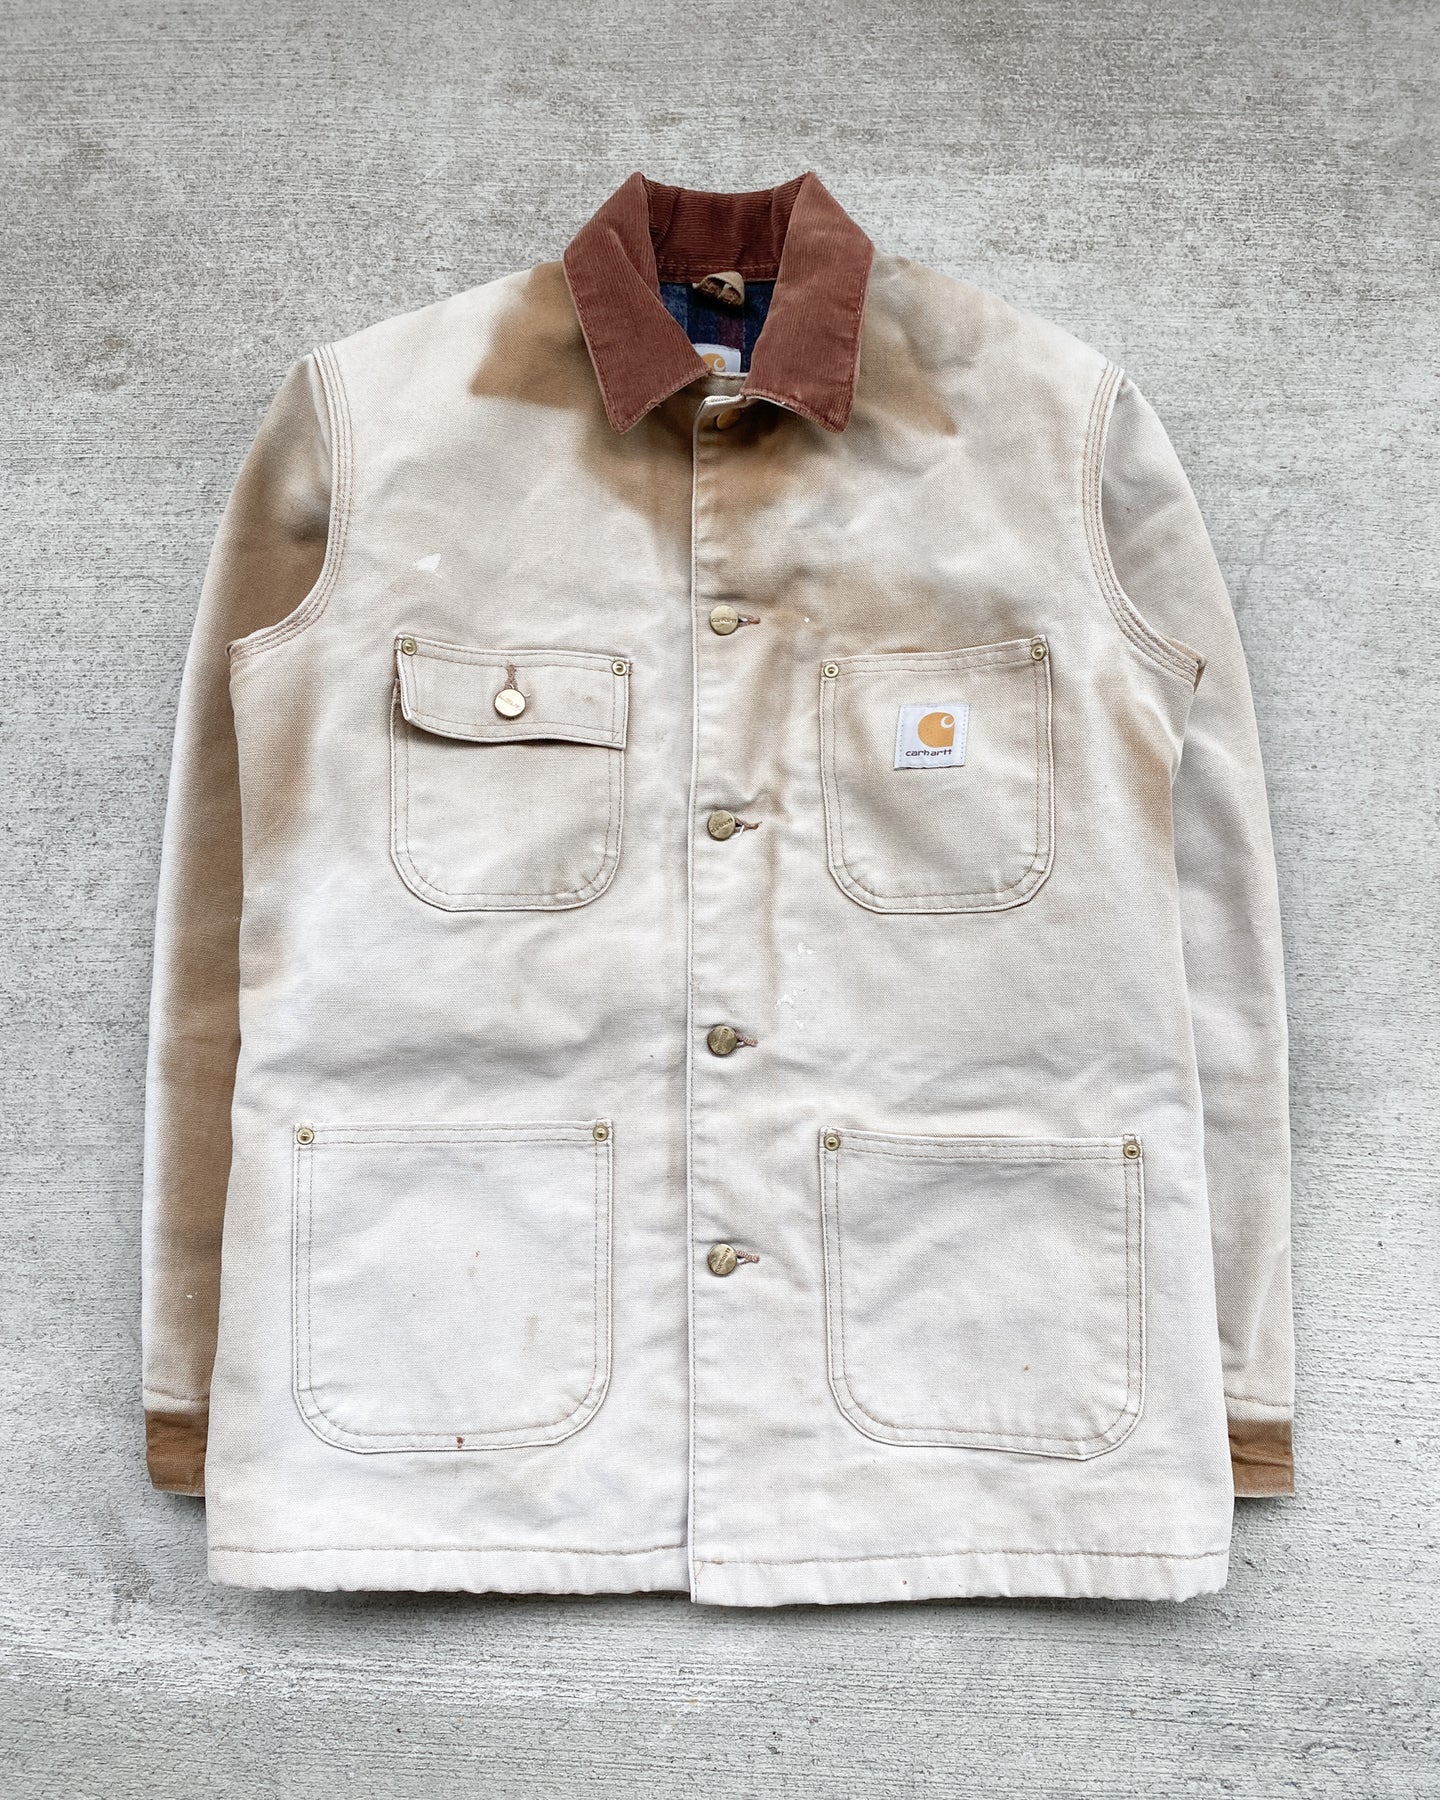 1990s Carhartt Sun Faded Chore Jacket - Size Large